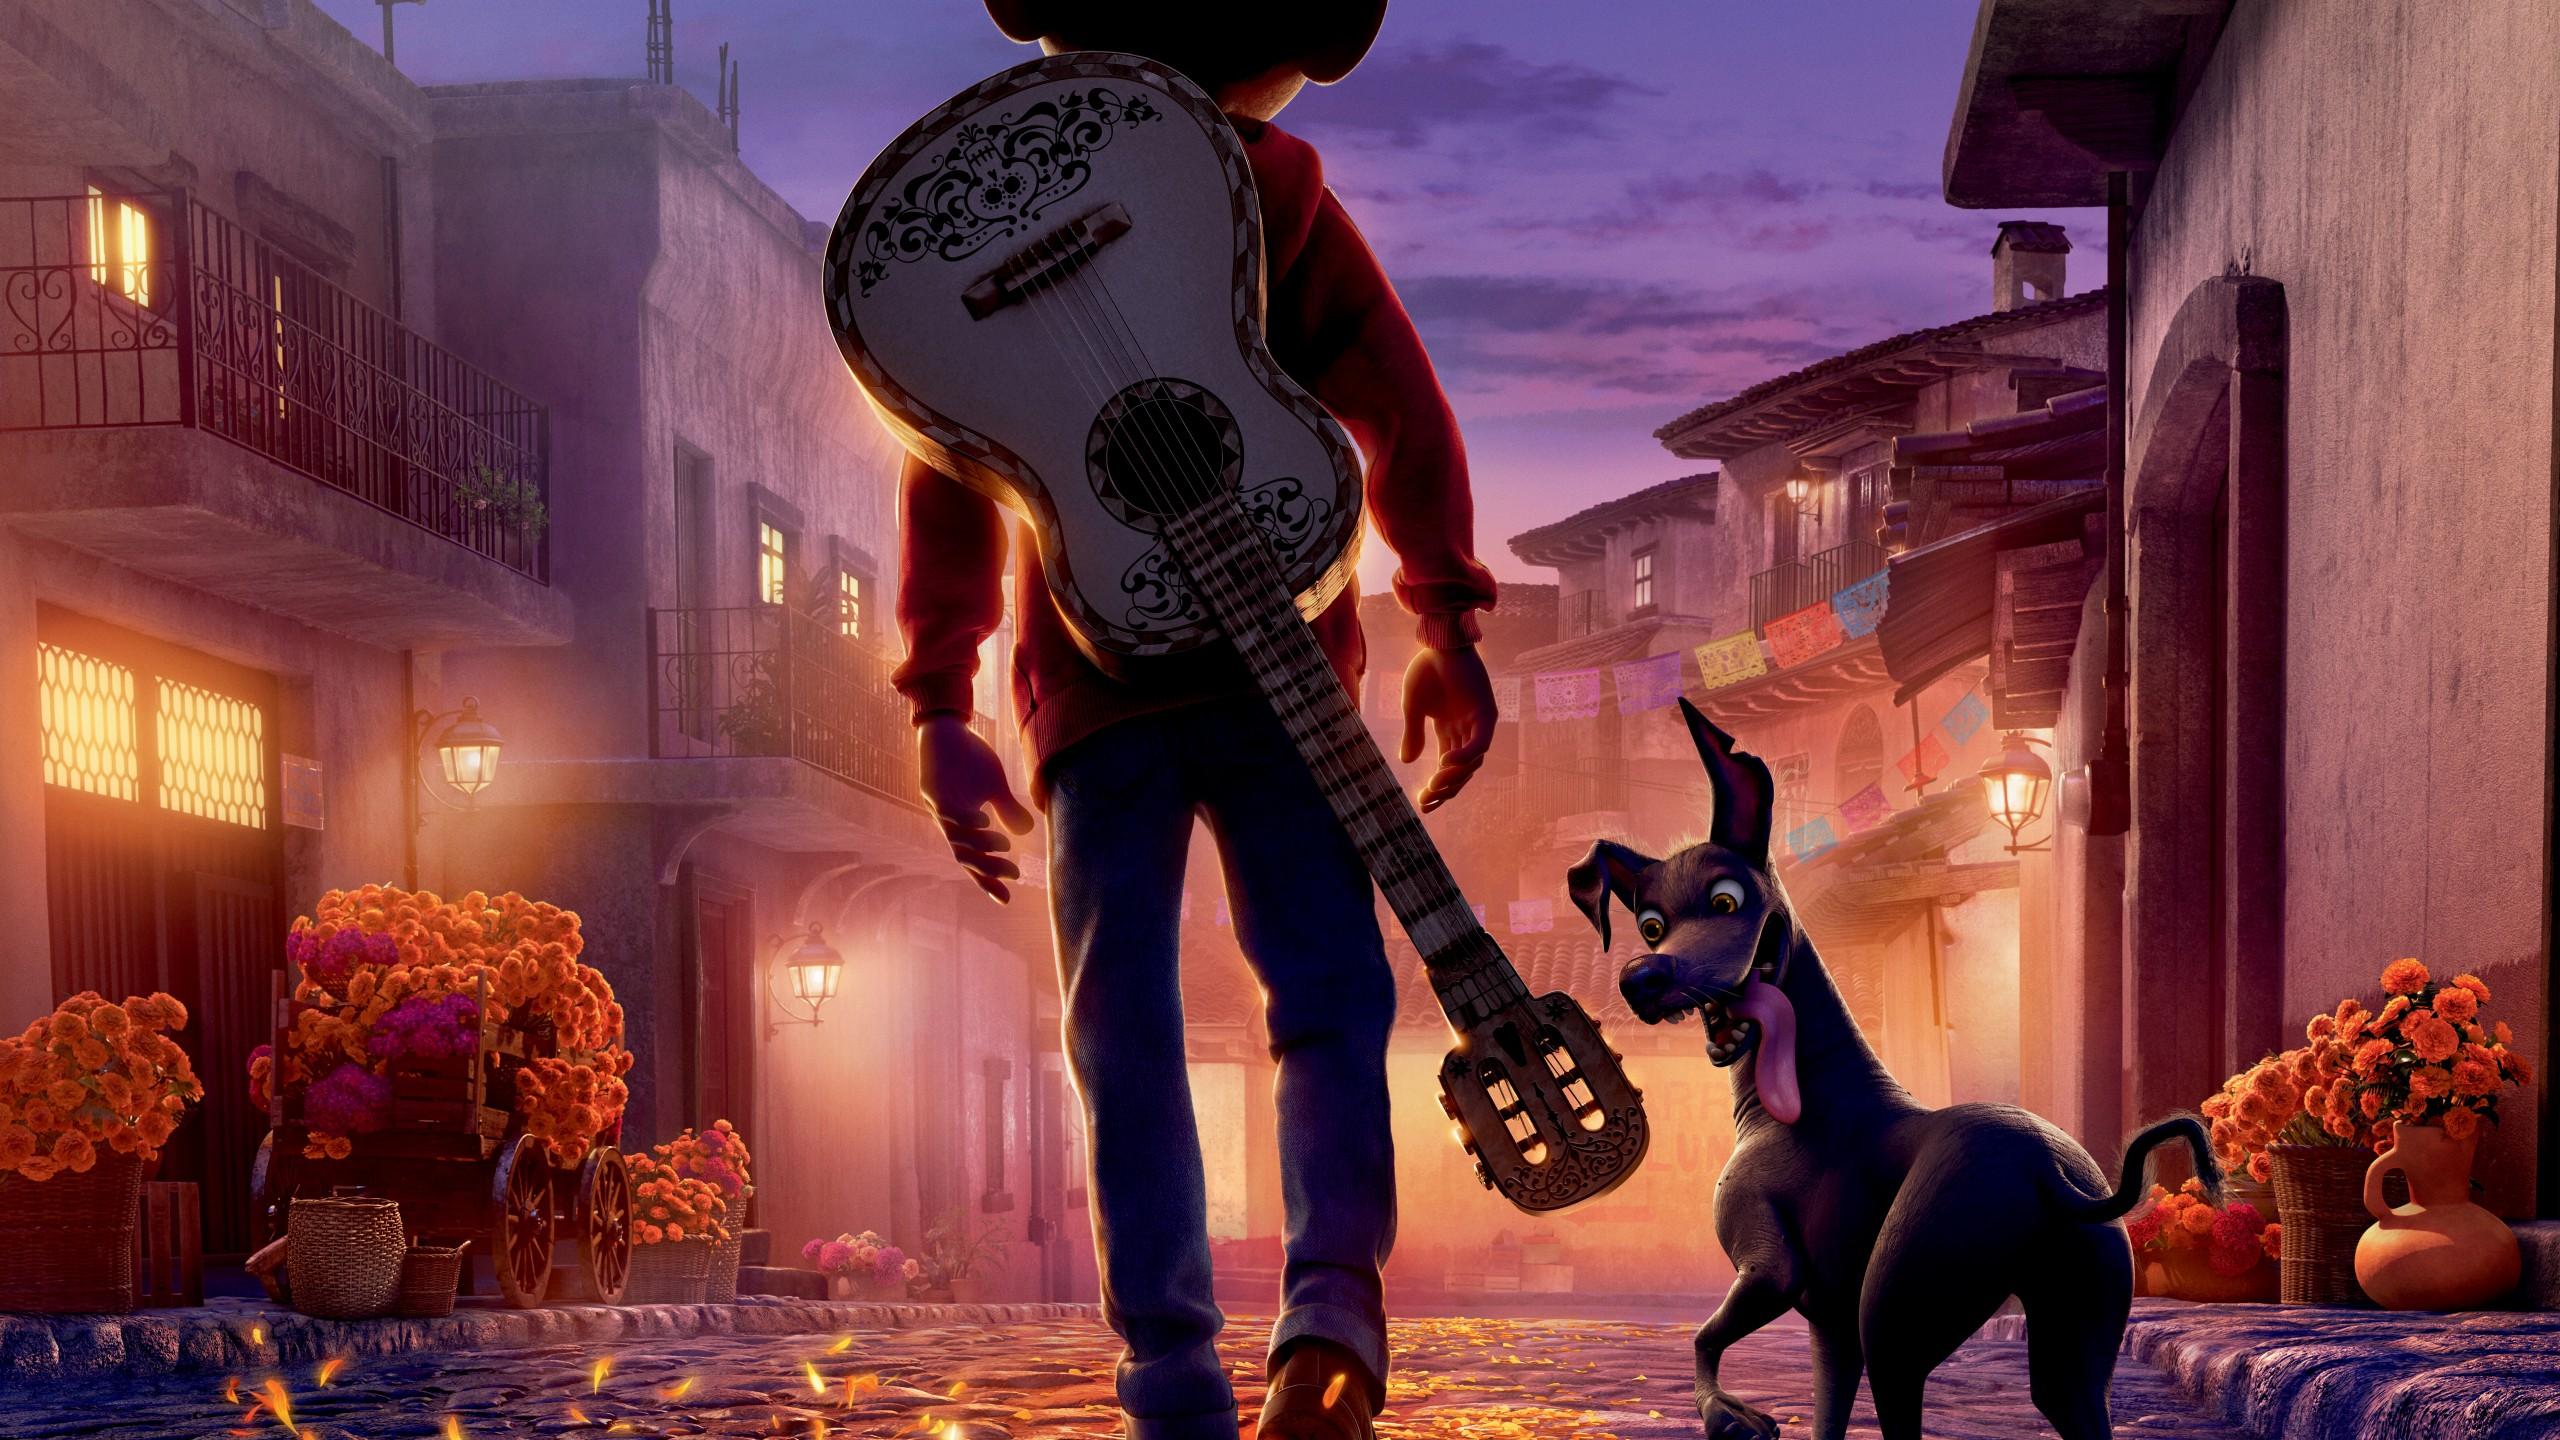 Wallpaper Coco, Pixar, Animation, 4K, 8K, Movies